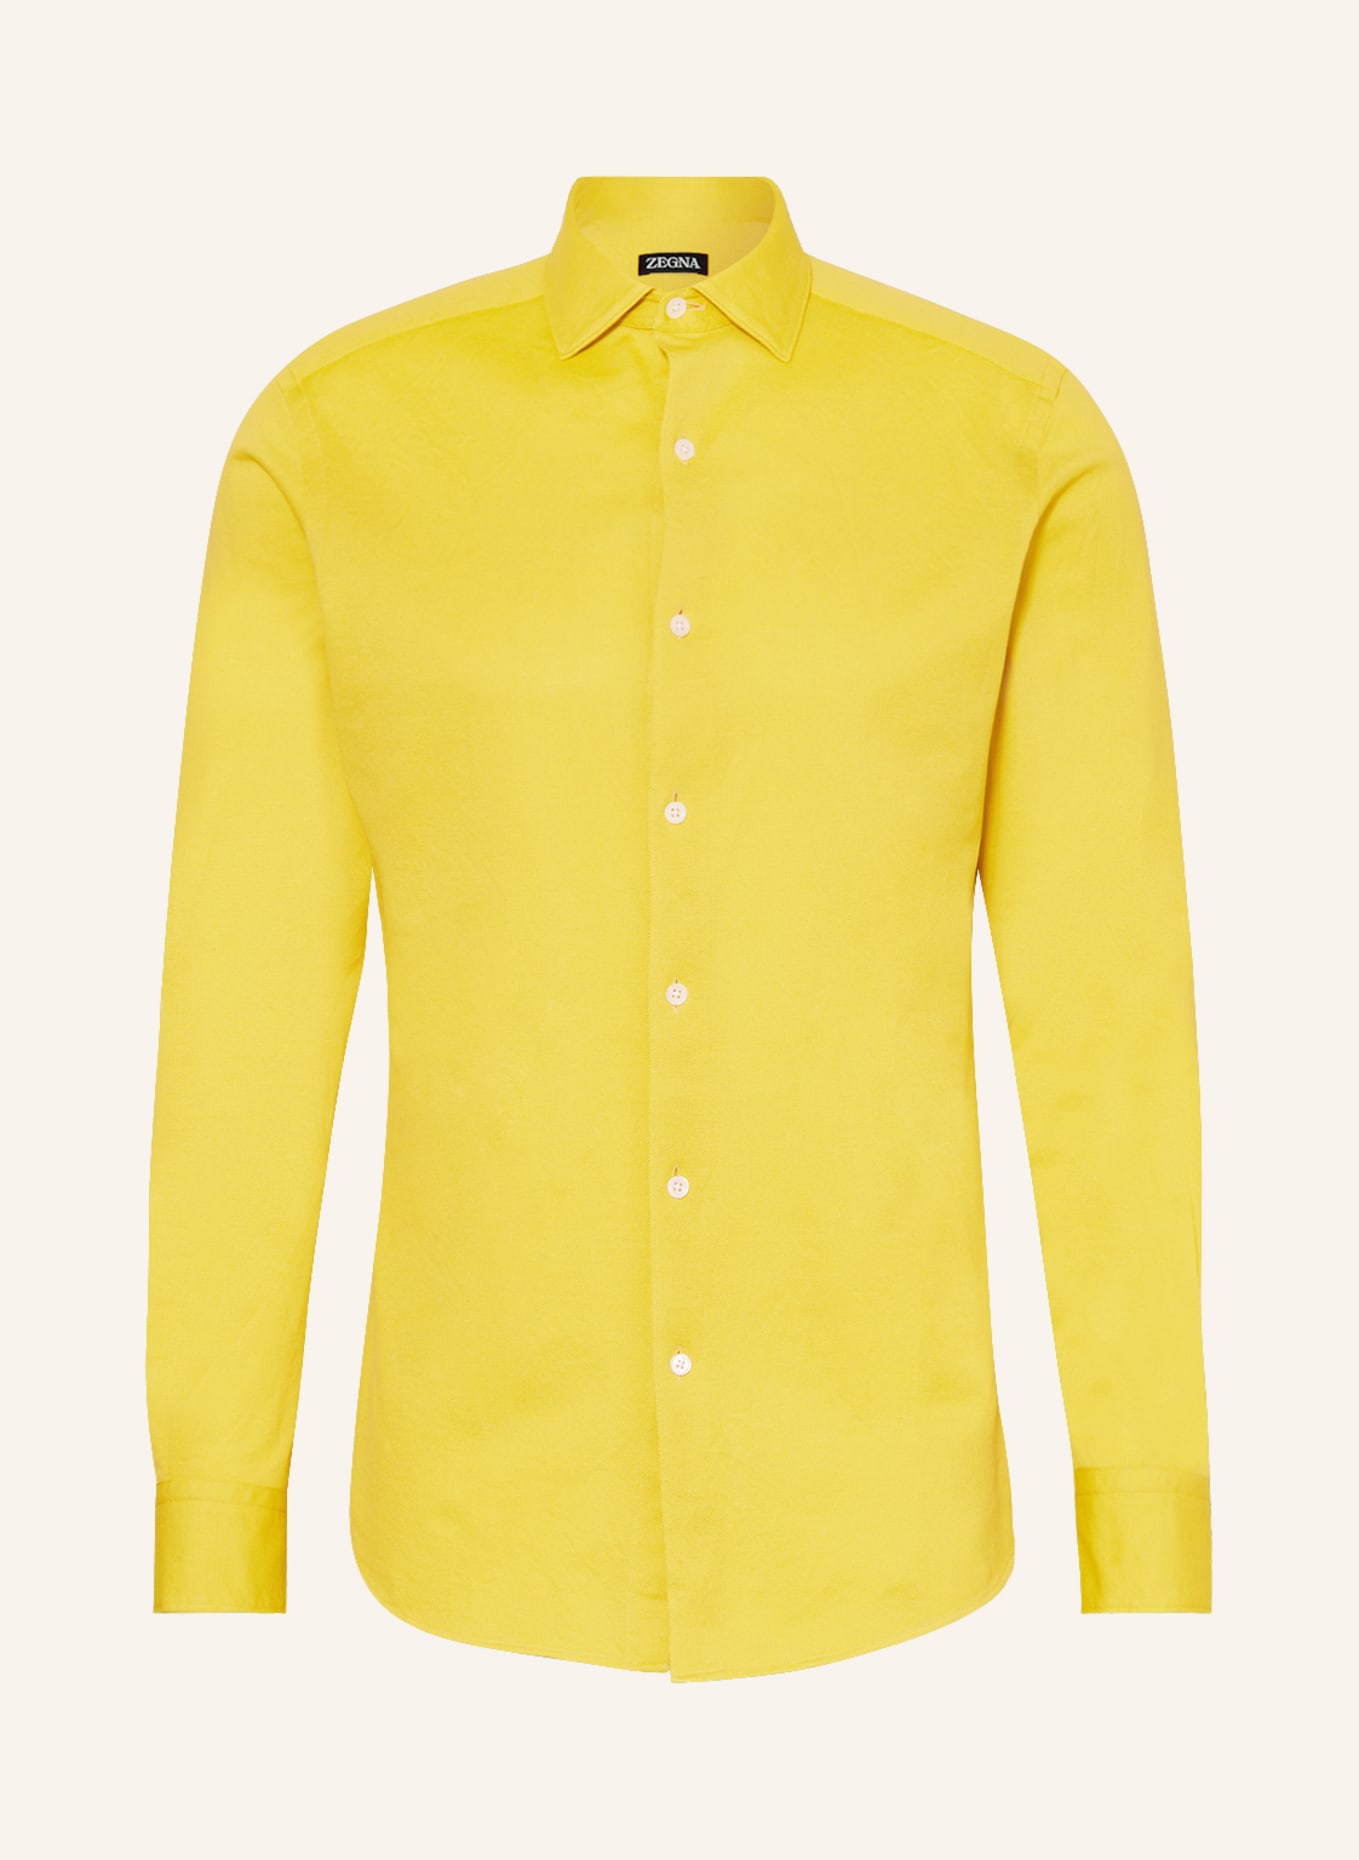 ZEGNA Jerseyhemd Regular Fit, Farbe: GELB (Bild 1)